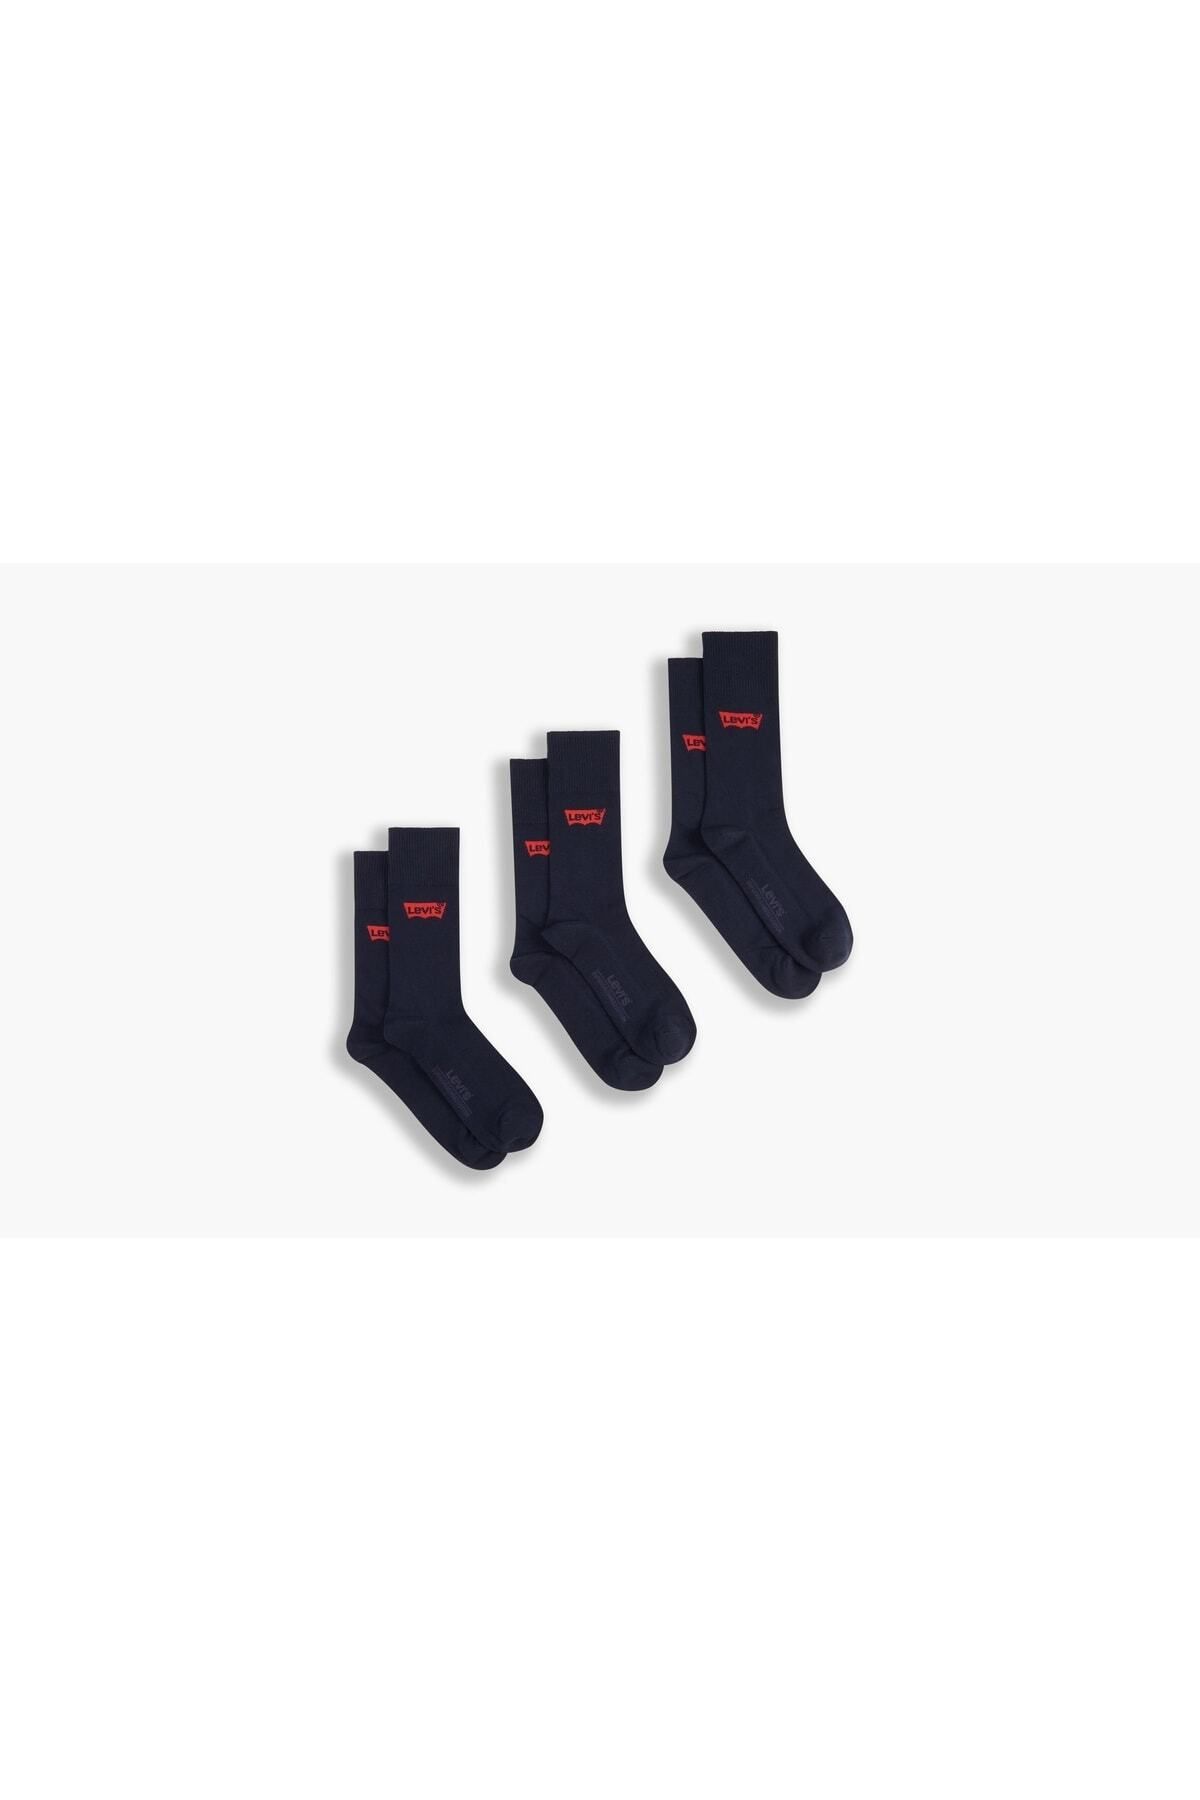 Levi's ® Regular Cut Batwing Socks - 3 Pack